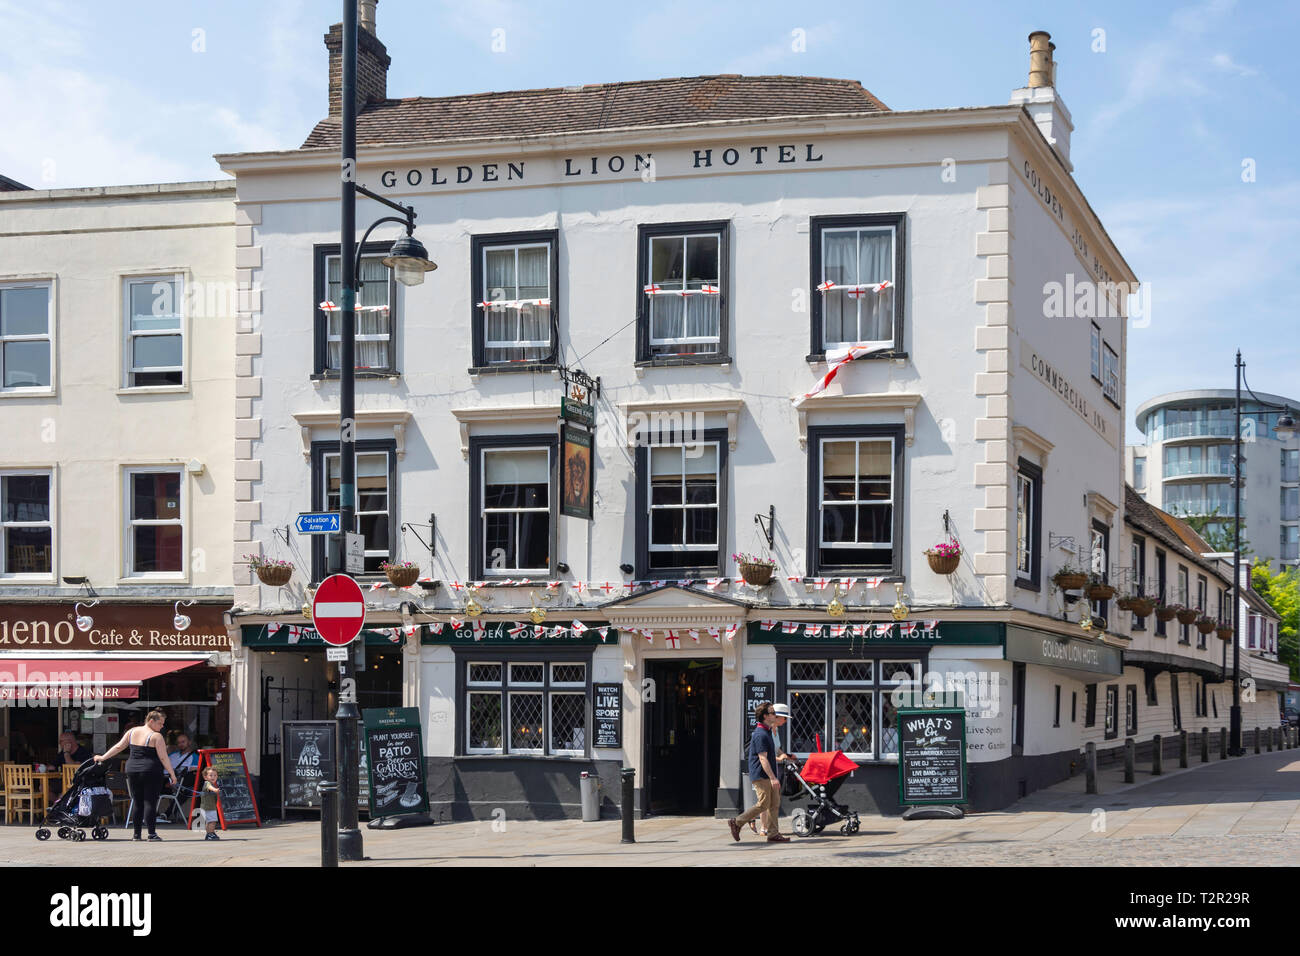 16th century Golden Lion Pub, High Street, Romford, London Borough of Havering, Greater London, England, United Kingdom Stock Photo